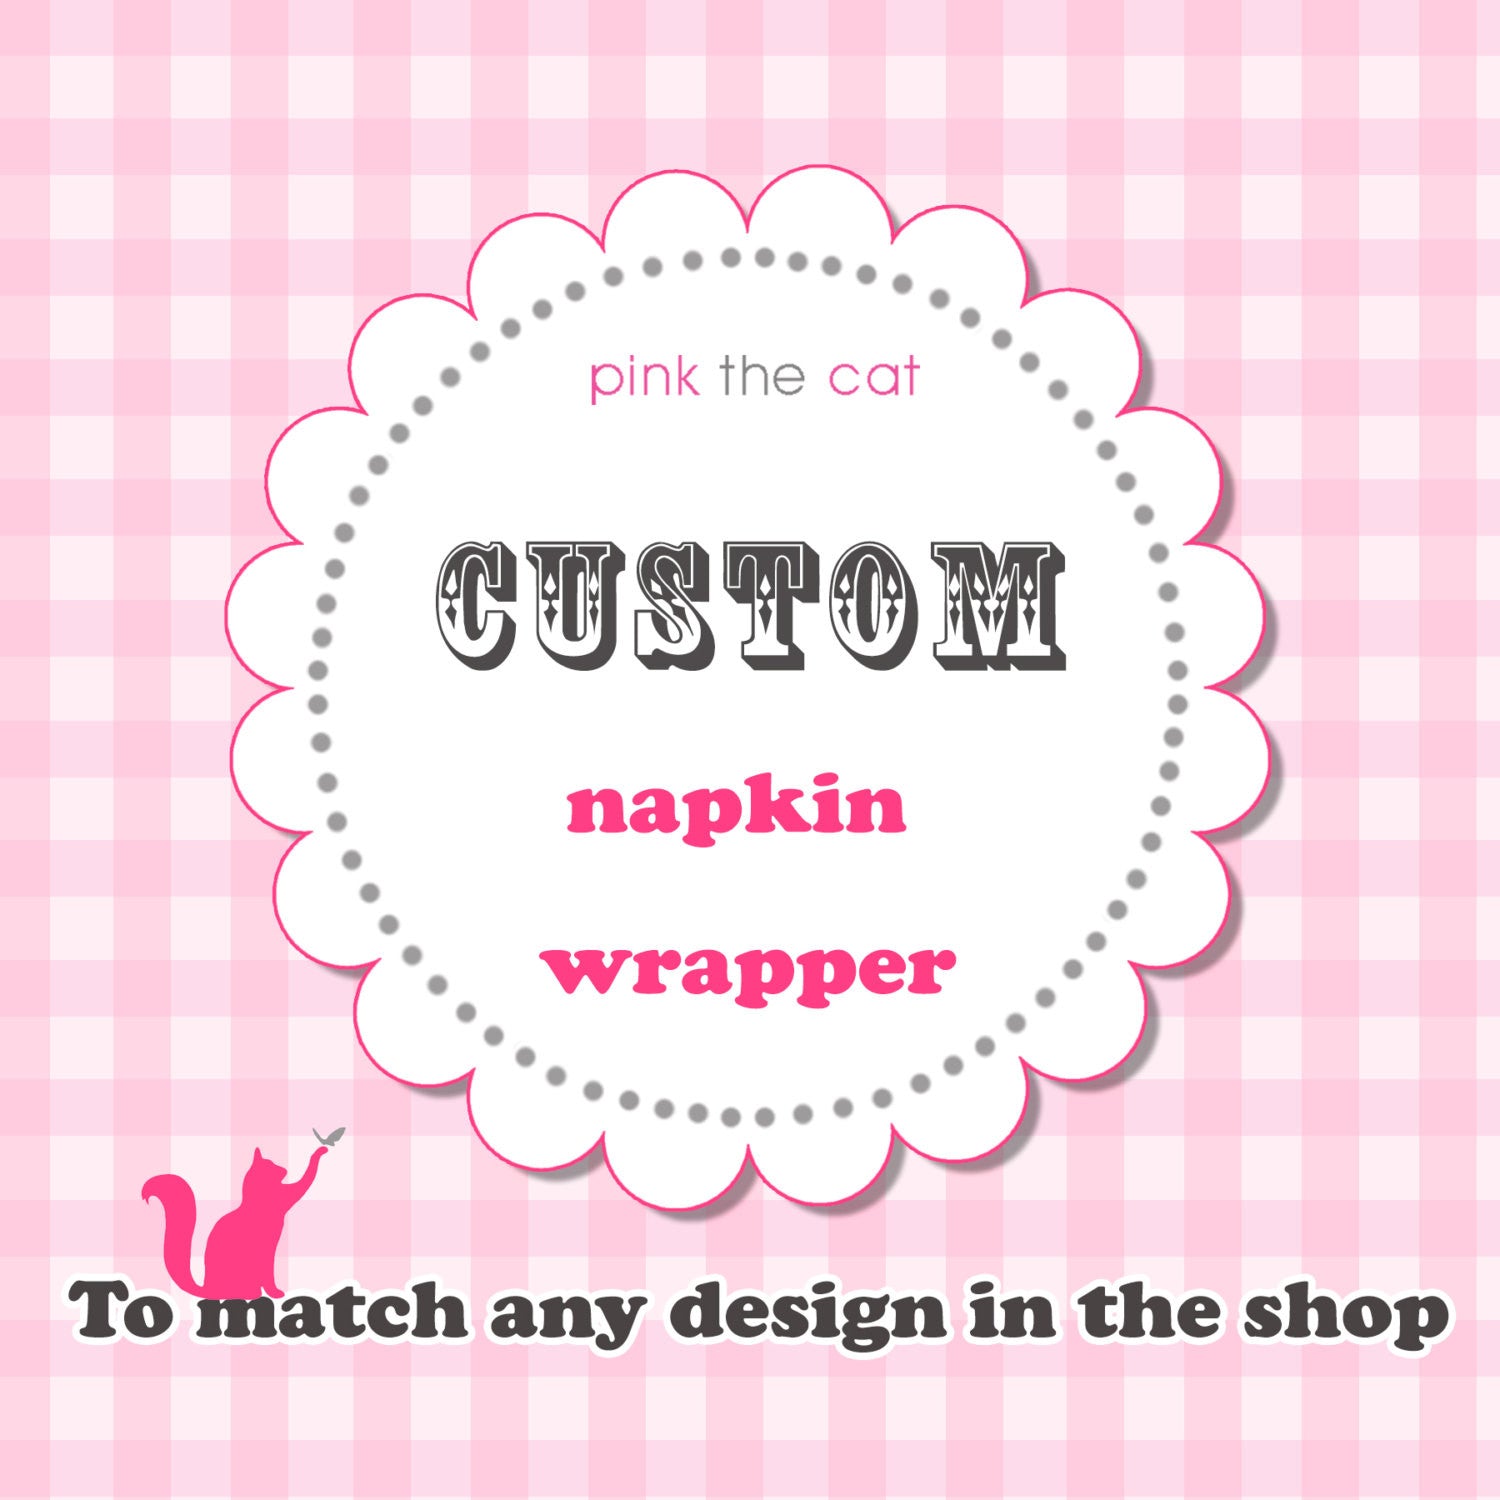 napkin wrapper